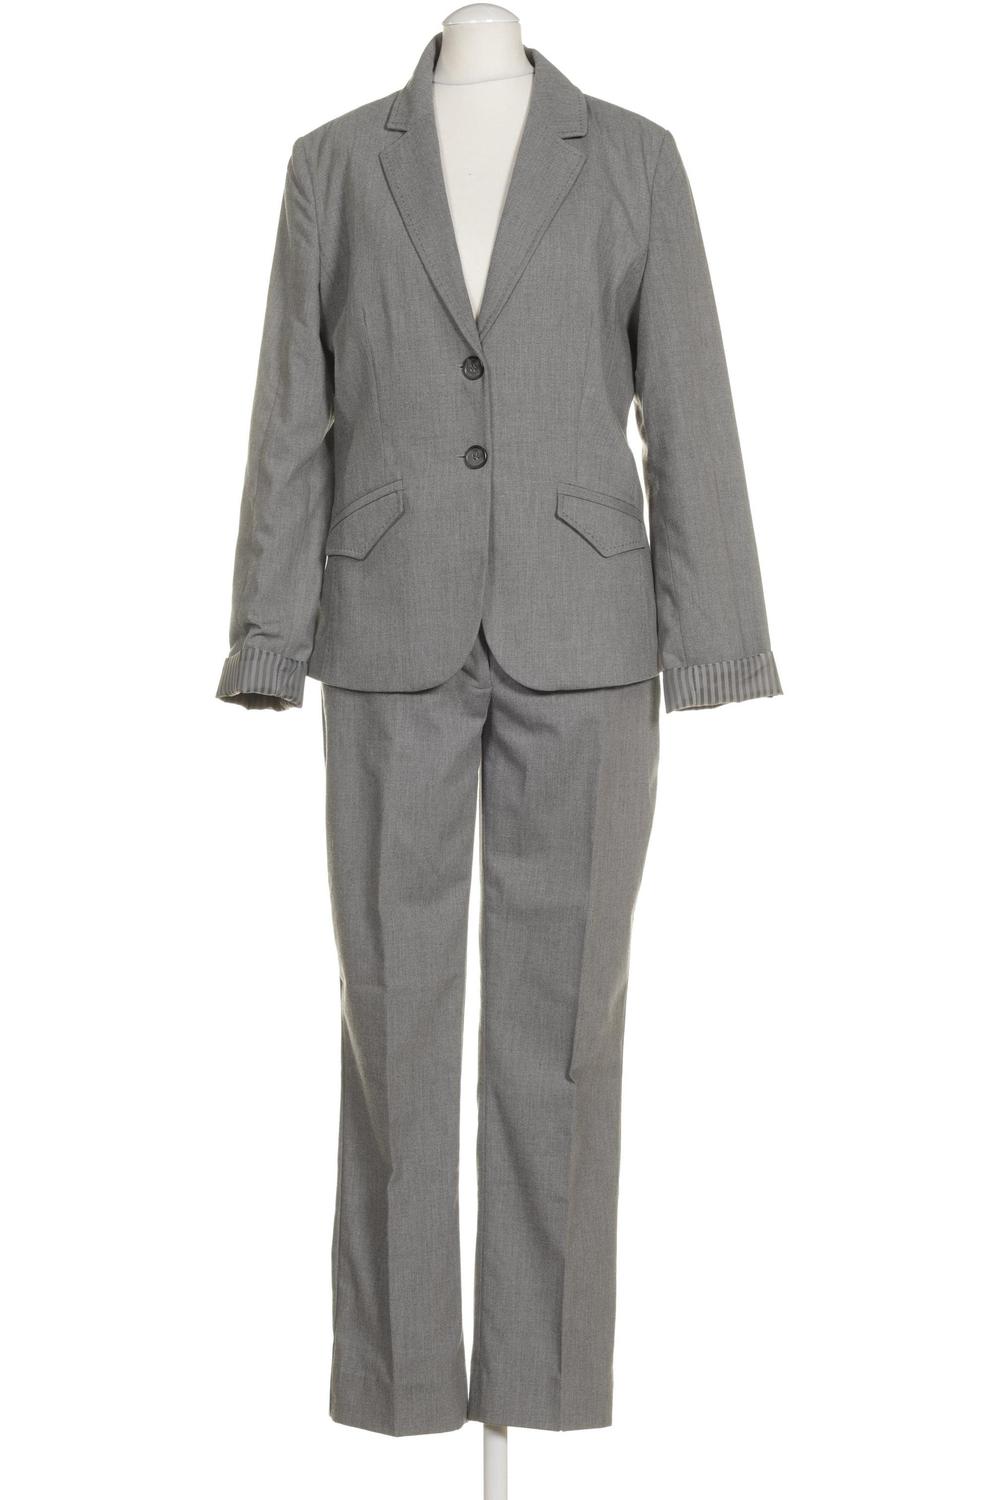 Kenny S Anzug Damen Kostum Suit Gr De 36 Kein Etikett Grau 7f3e10a Ebay